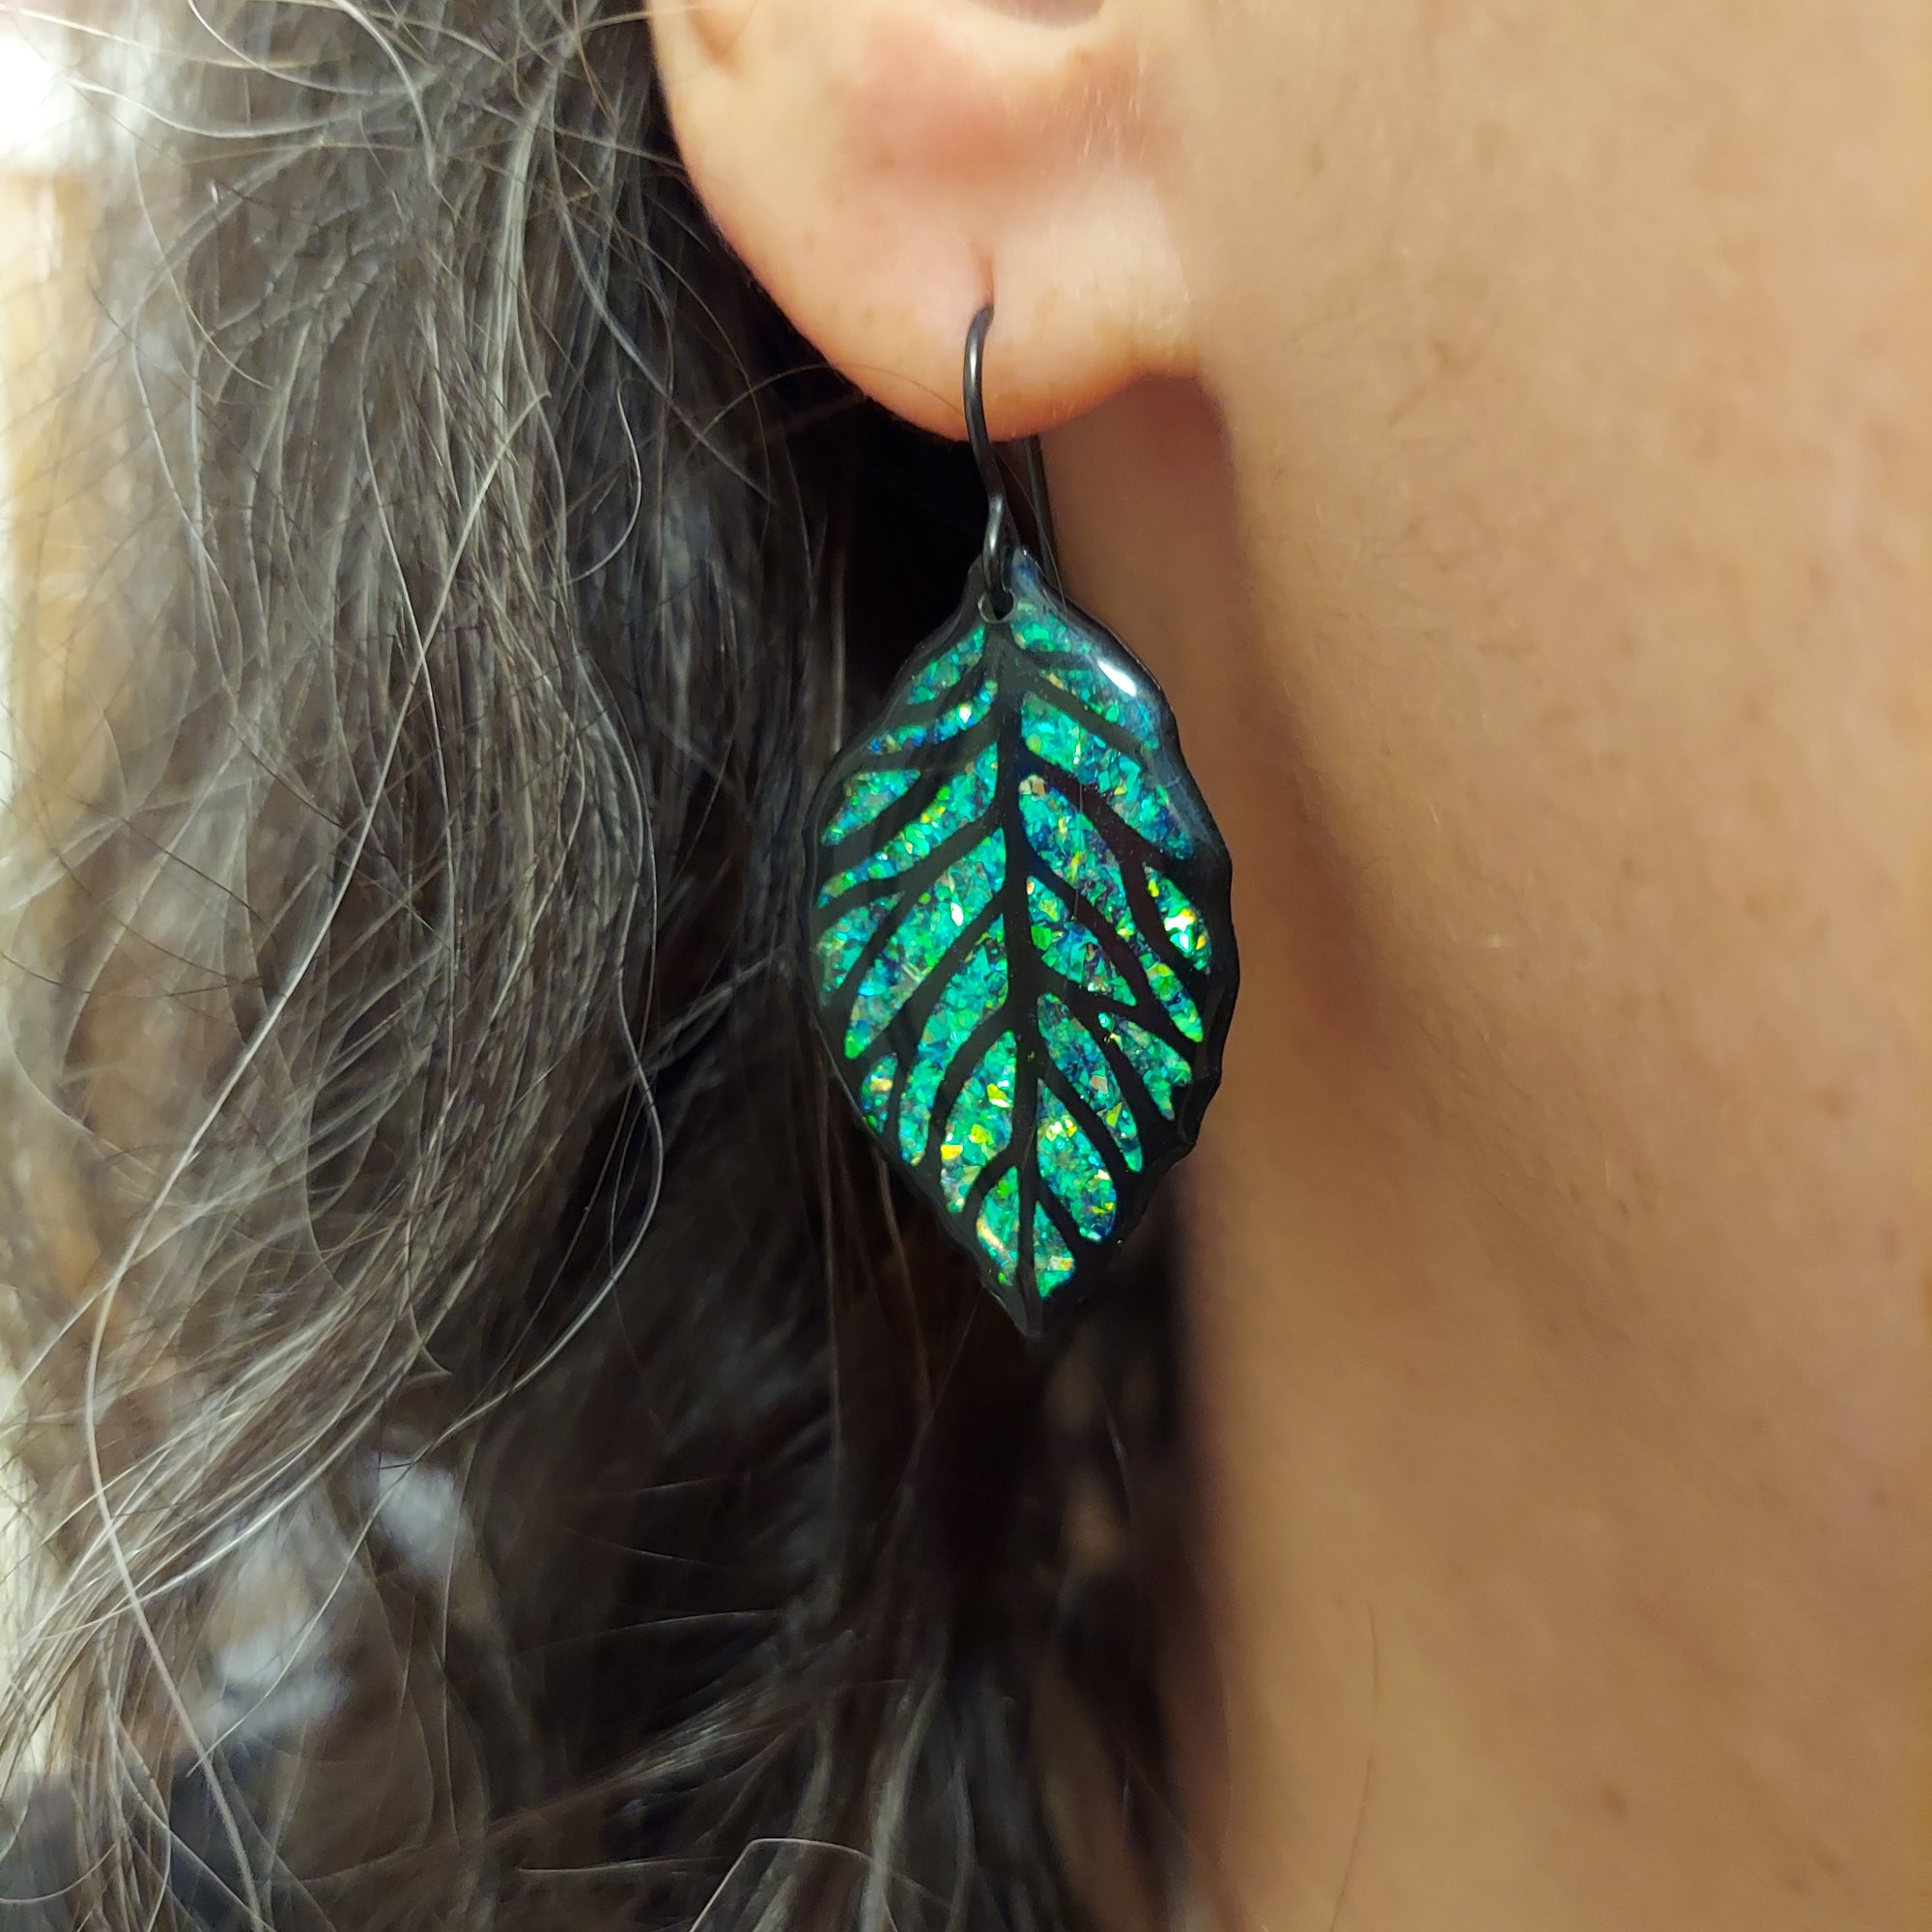 Lightweight Sparkle Leaf Earrings